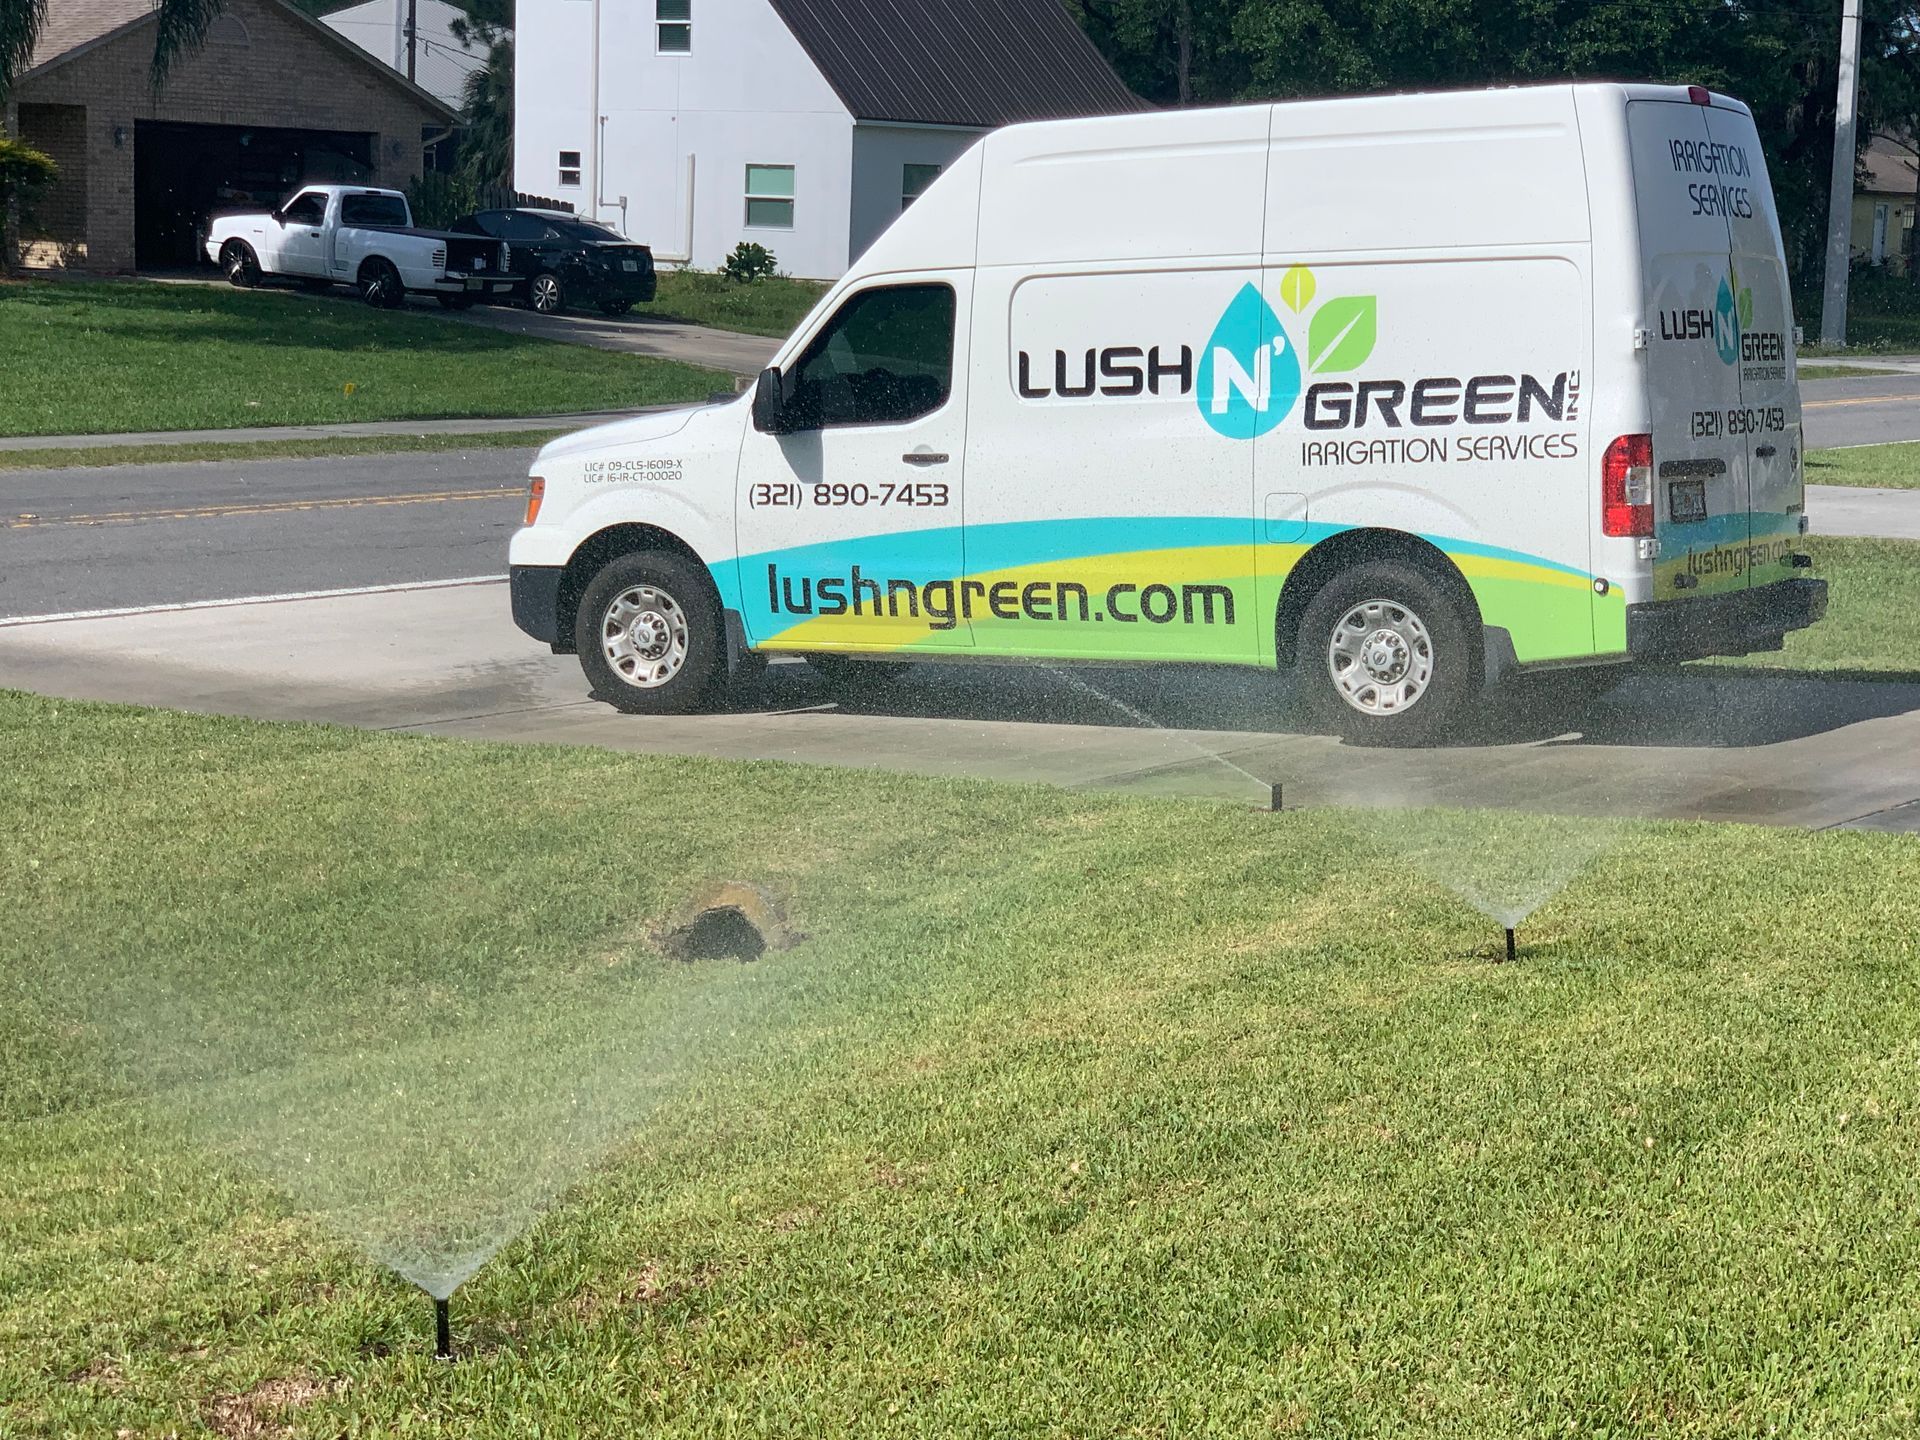 Lush N Green Van in front of property